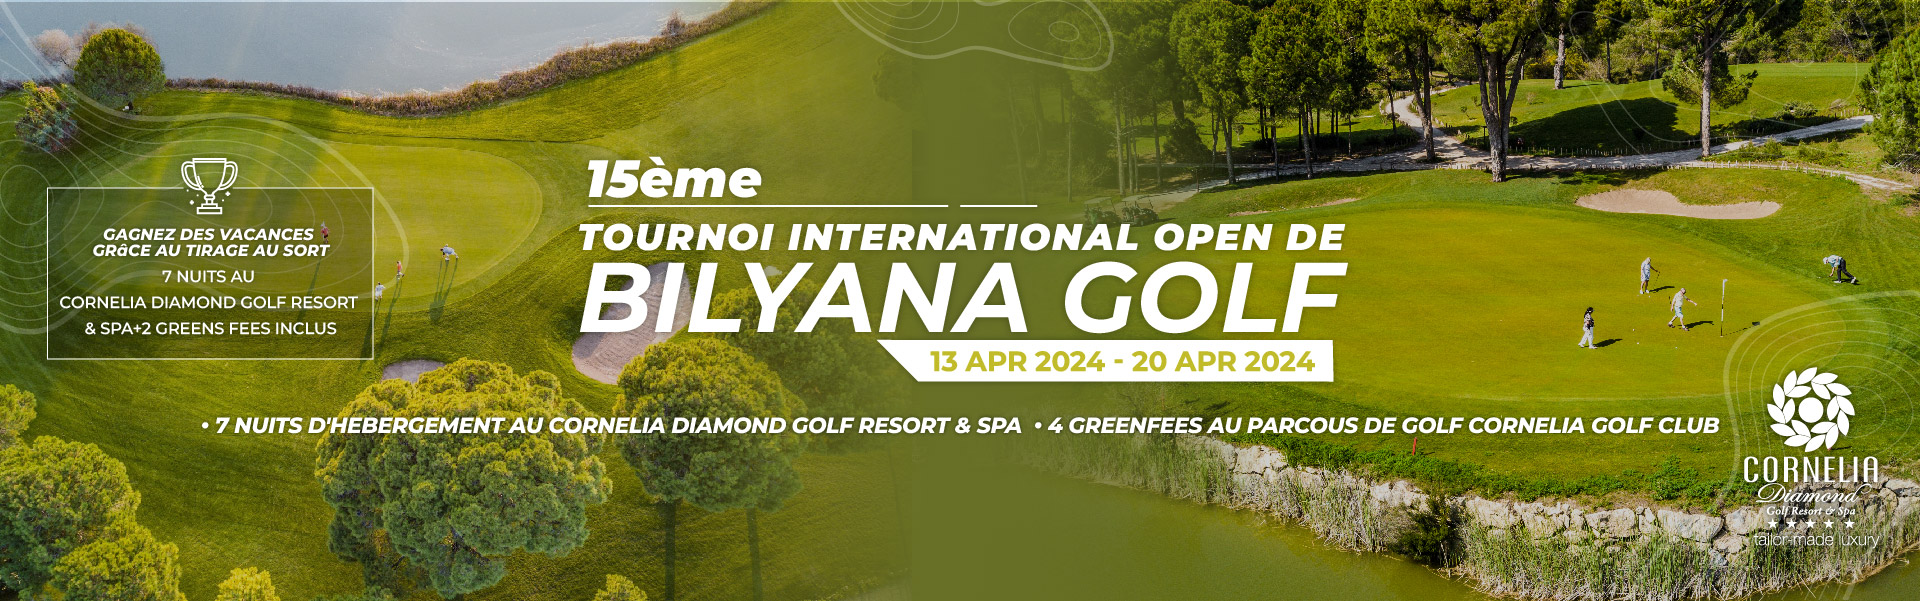 Bilyana Golf - 15ème TOURNOI INTERNATIONAL OPEN DE BILYANA GOLF